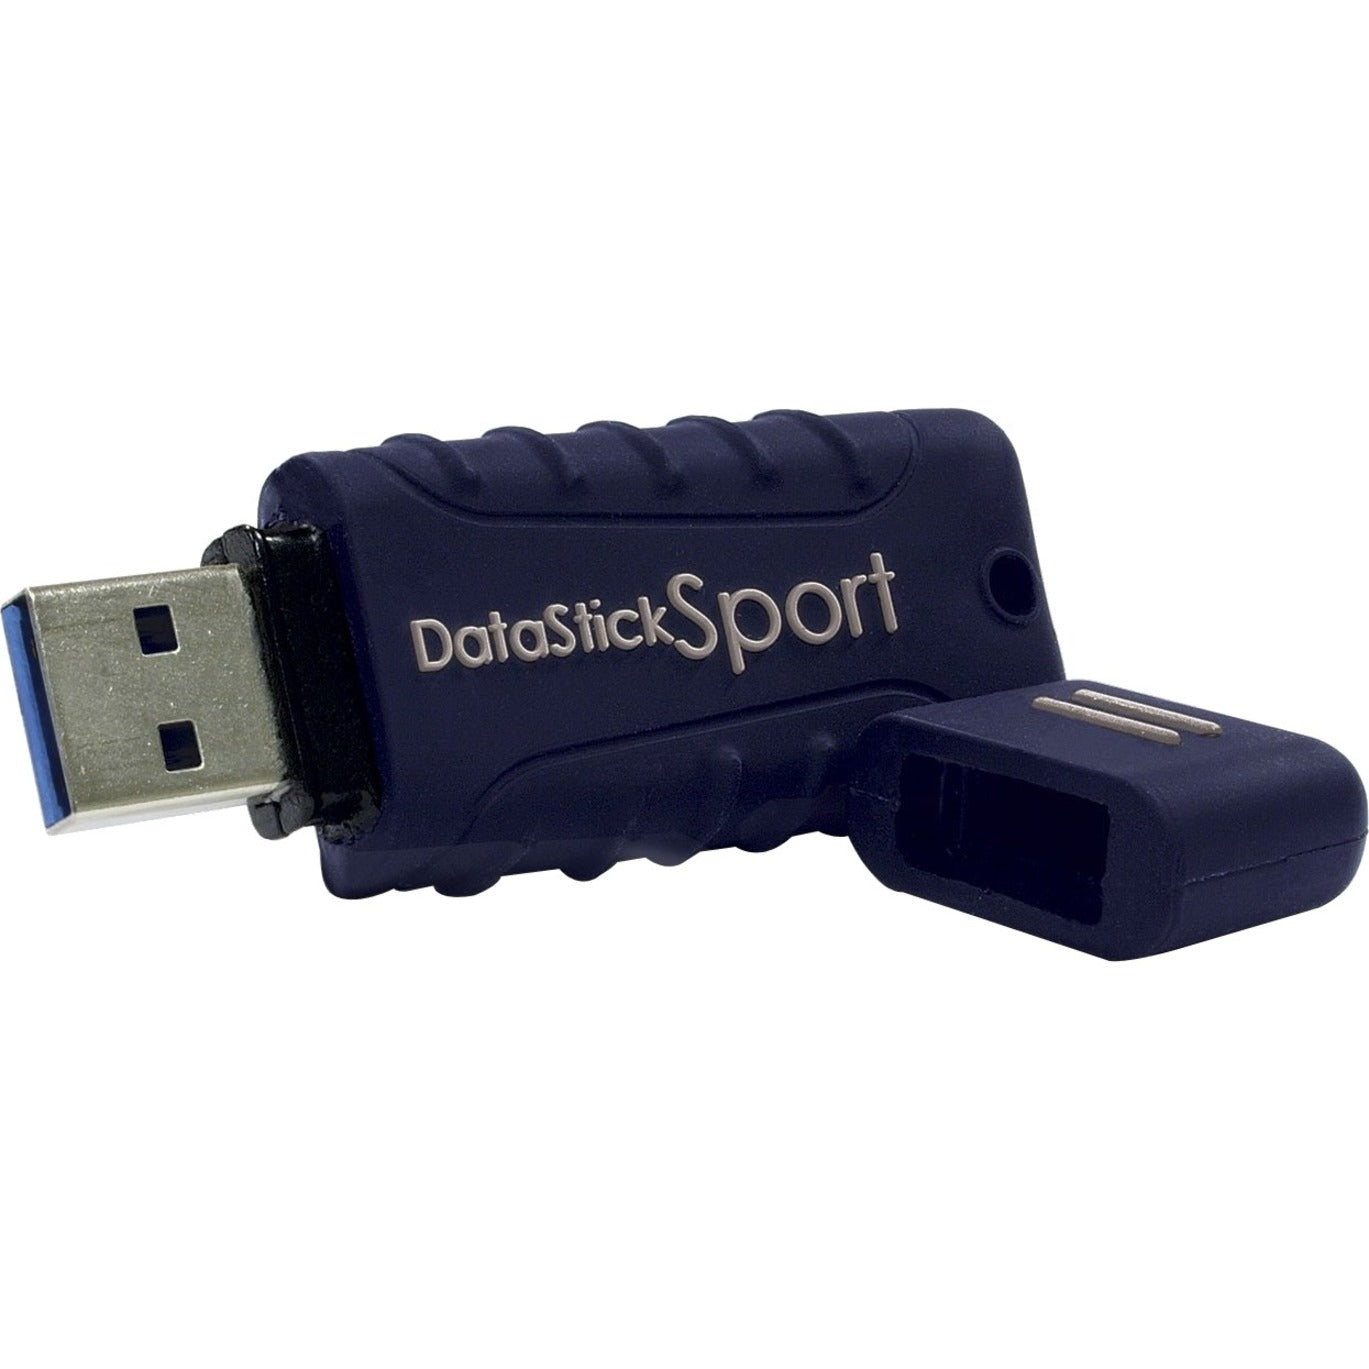 Centon S1-U3W2-16G MP Essential USB 3.0 Datastick Sport (Blue) 16GB, High-Speed Flash Drive